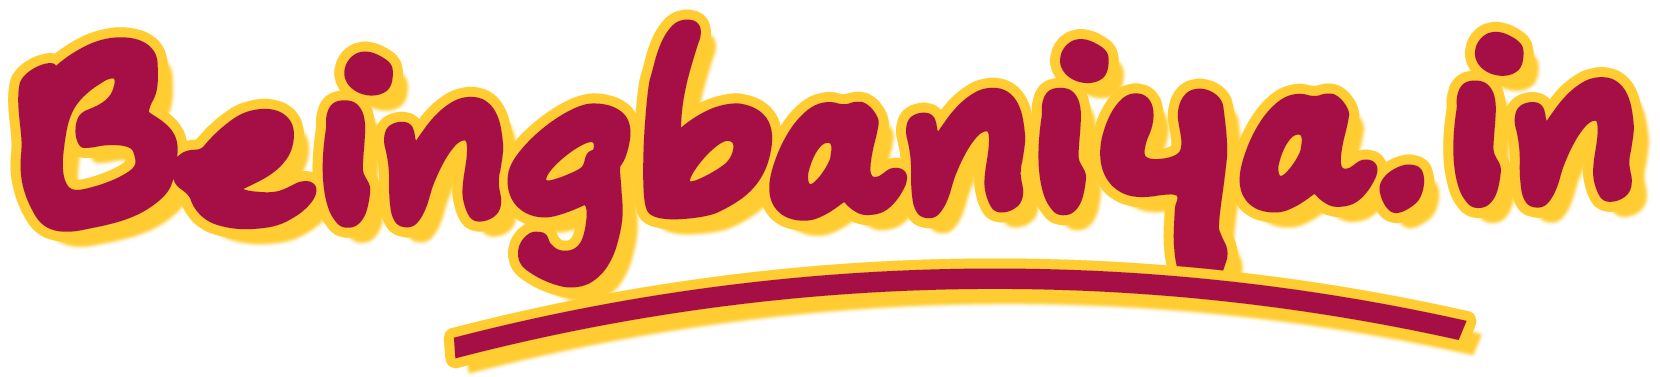 beingbaniya.in logo